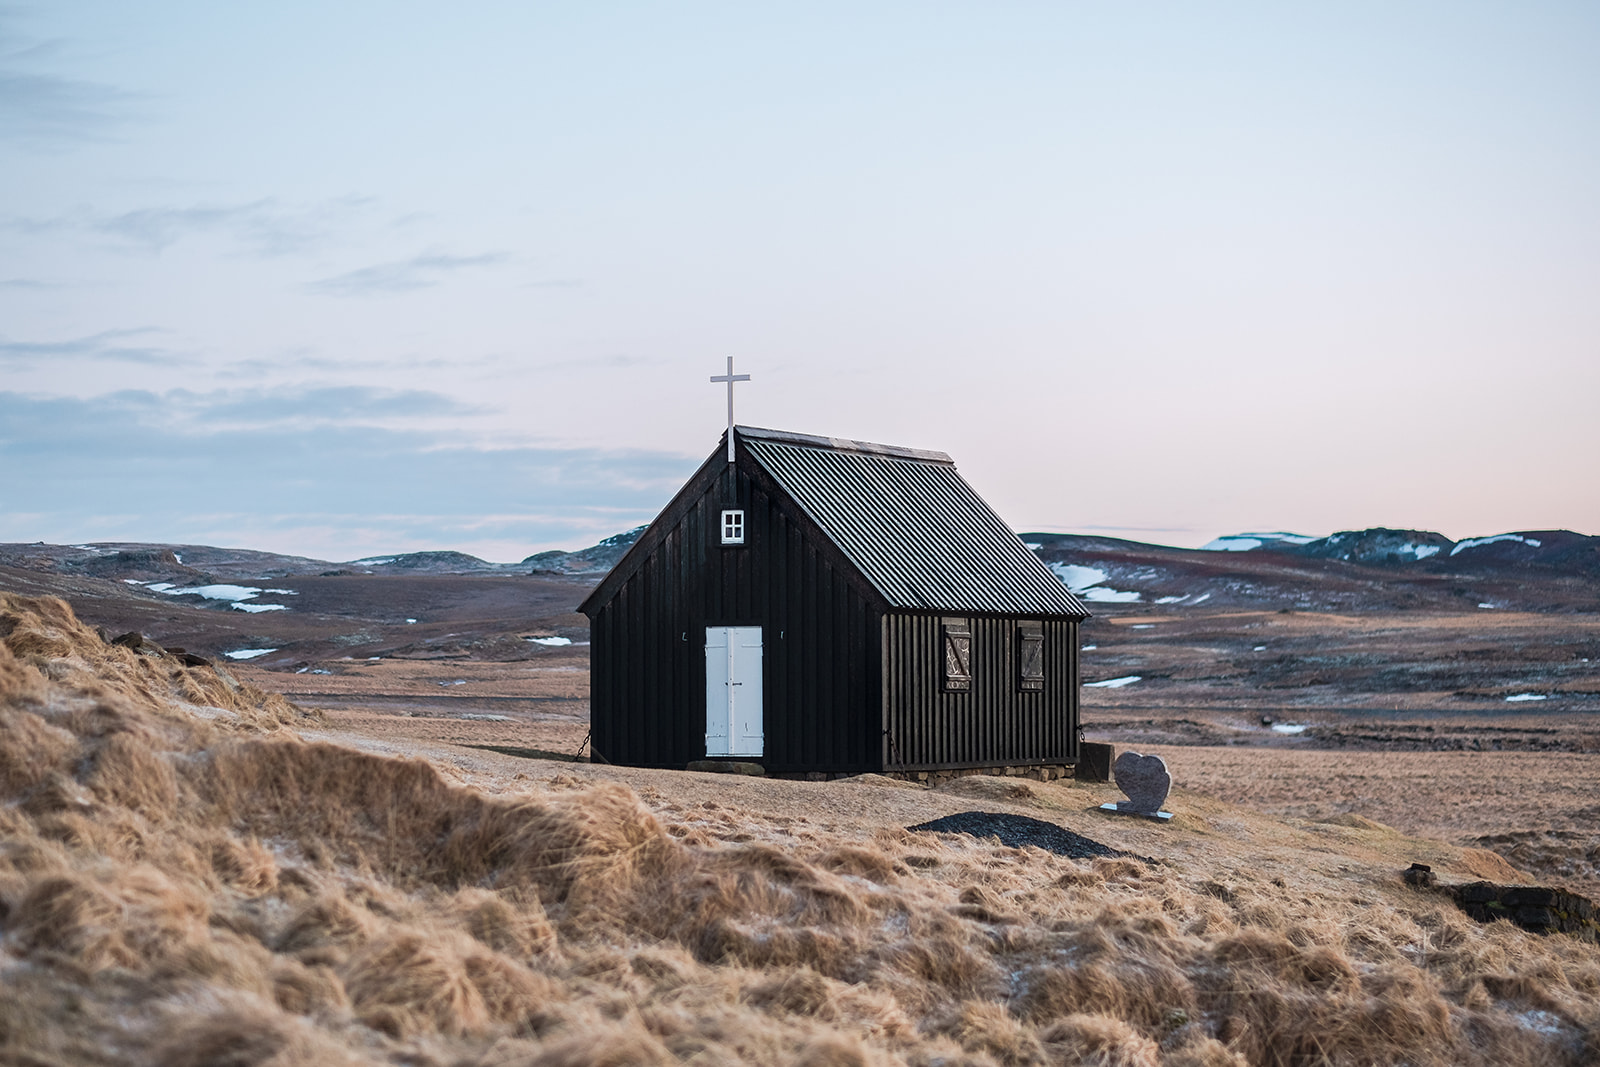 Krýsuvík Black Church in Iceland during the winter